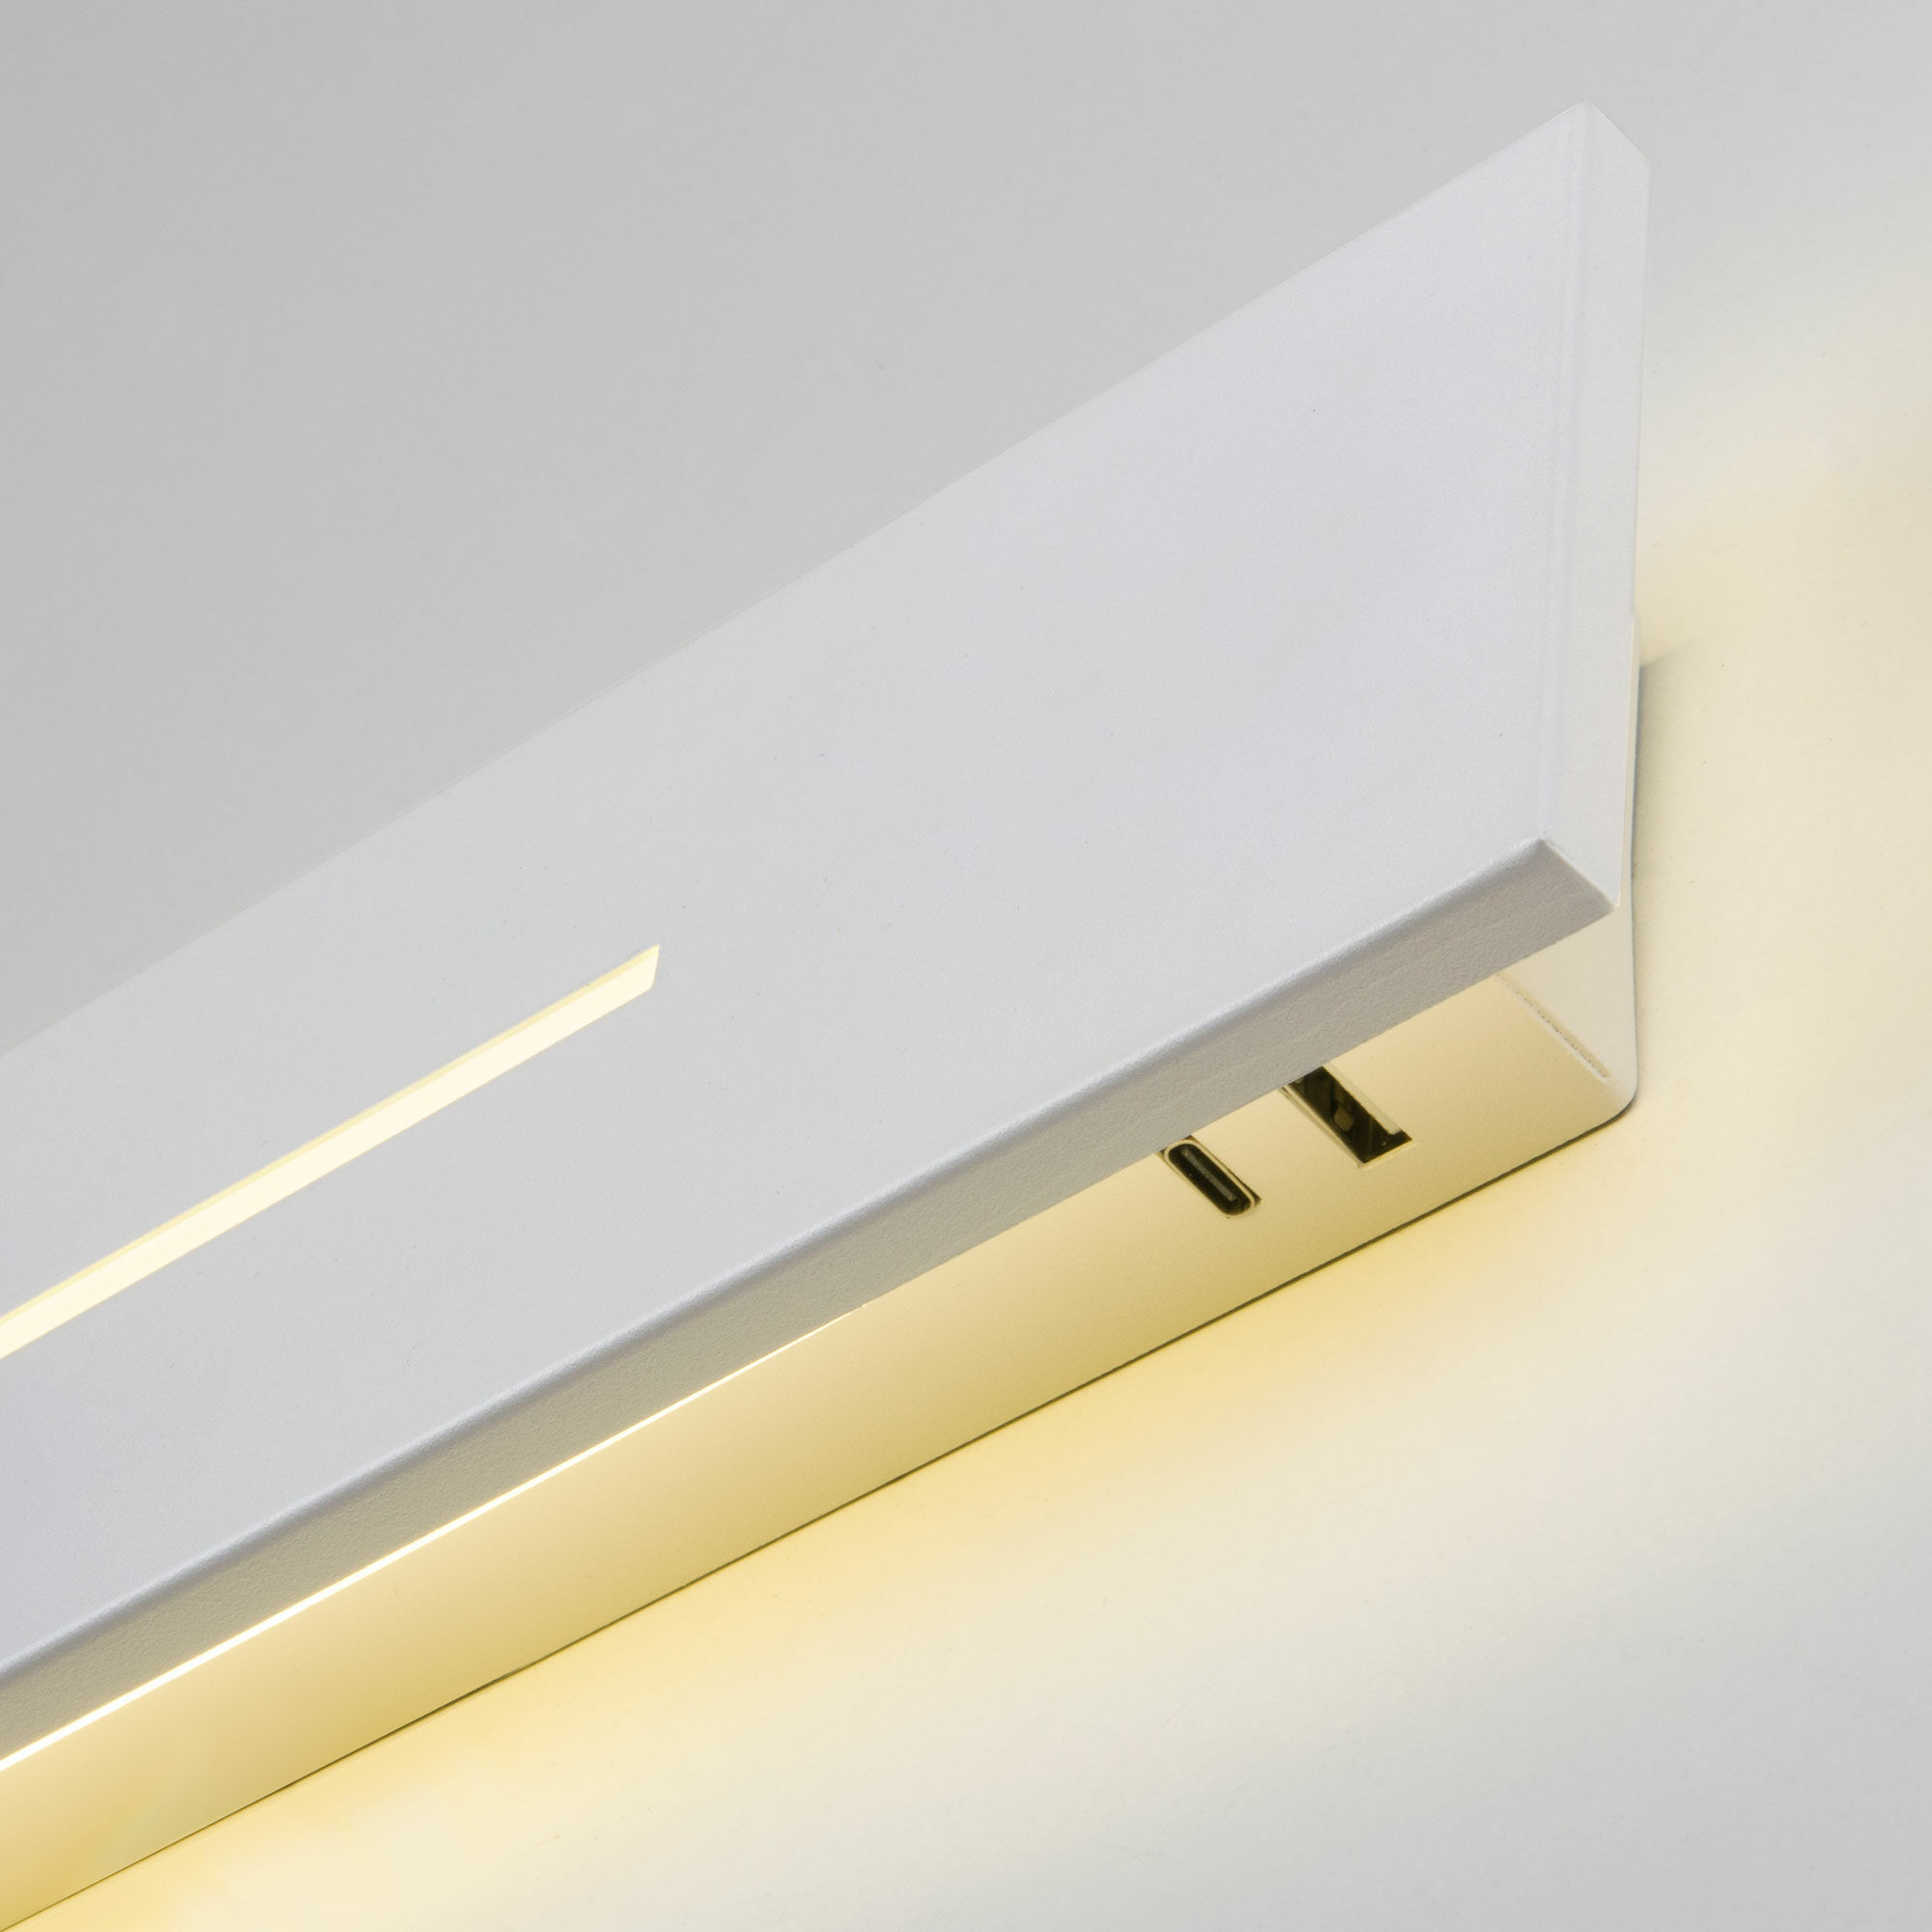 Светильник настенный c USB/Type C разъемами Elektrostandard Tuo LED MRL LED 1117 белый